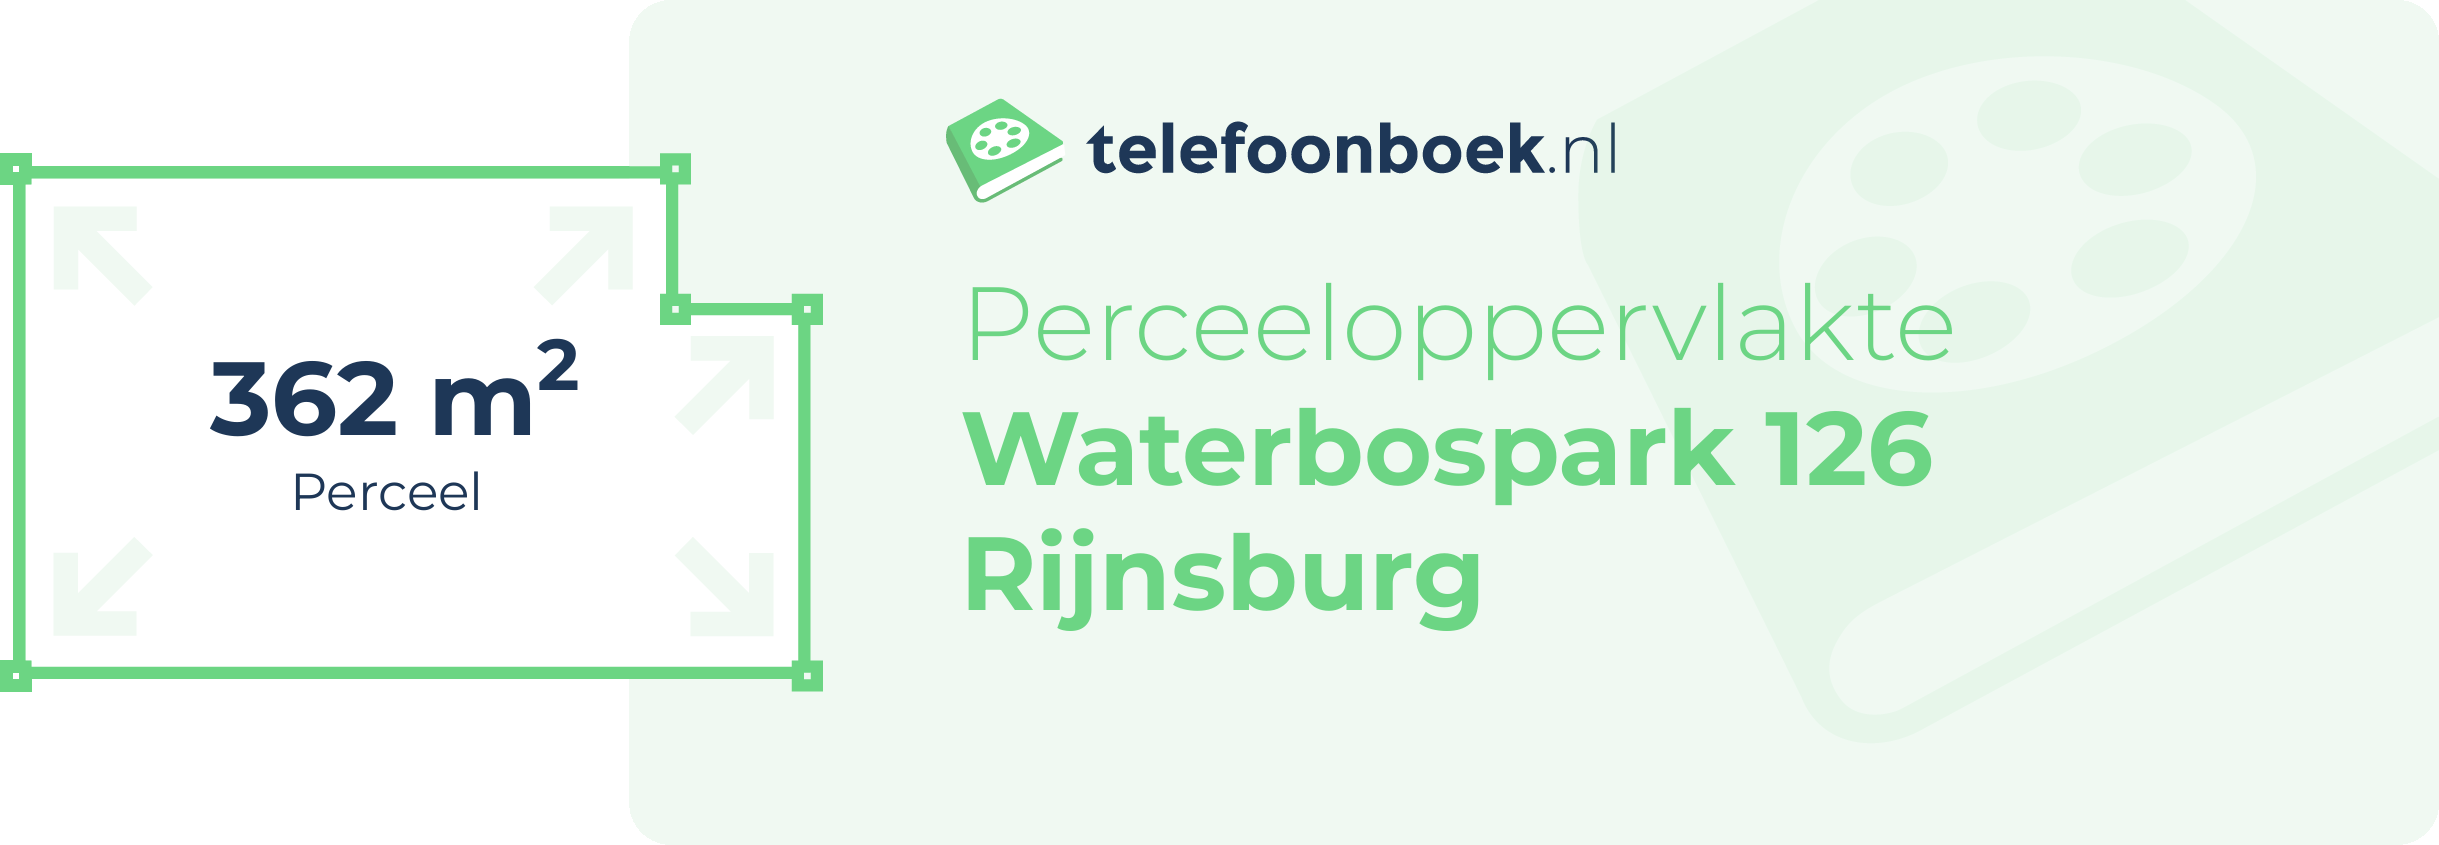 Perceeloppervlakte Waterbospark 126 Rijnsburg